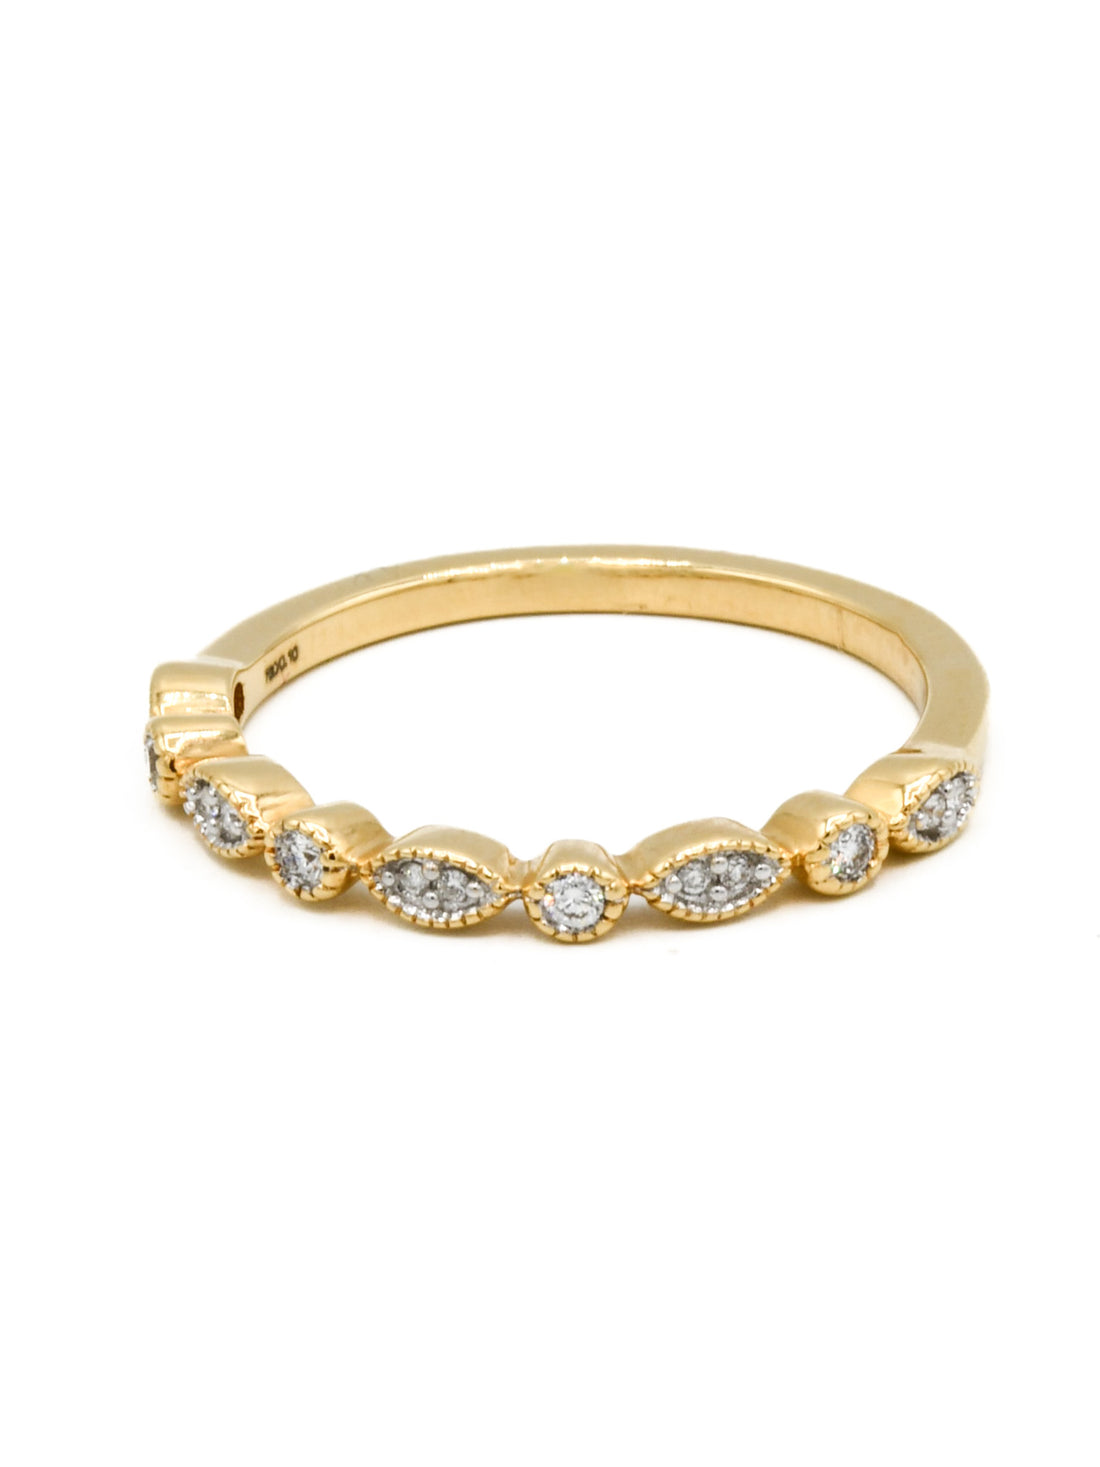 18ct Gold 0.10ct Diamond Ladies Ring - Roop Darshan